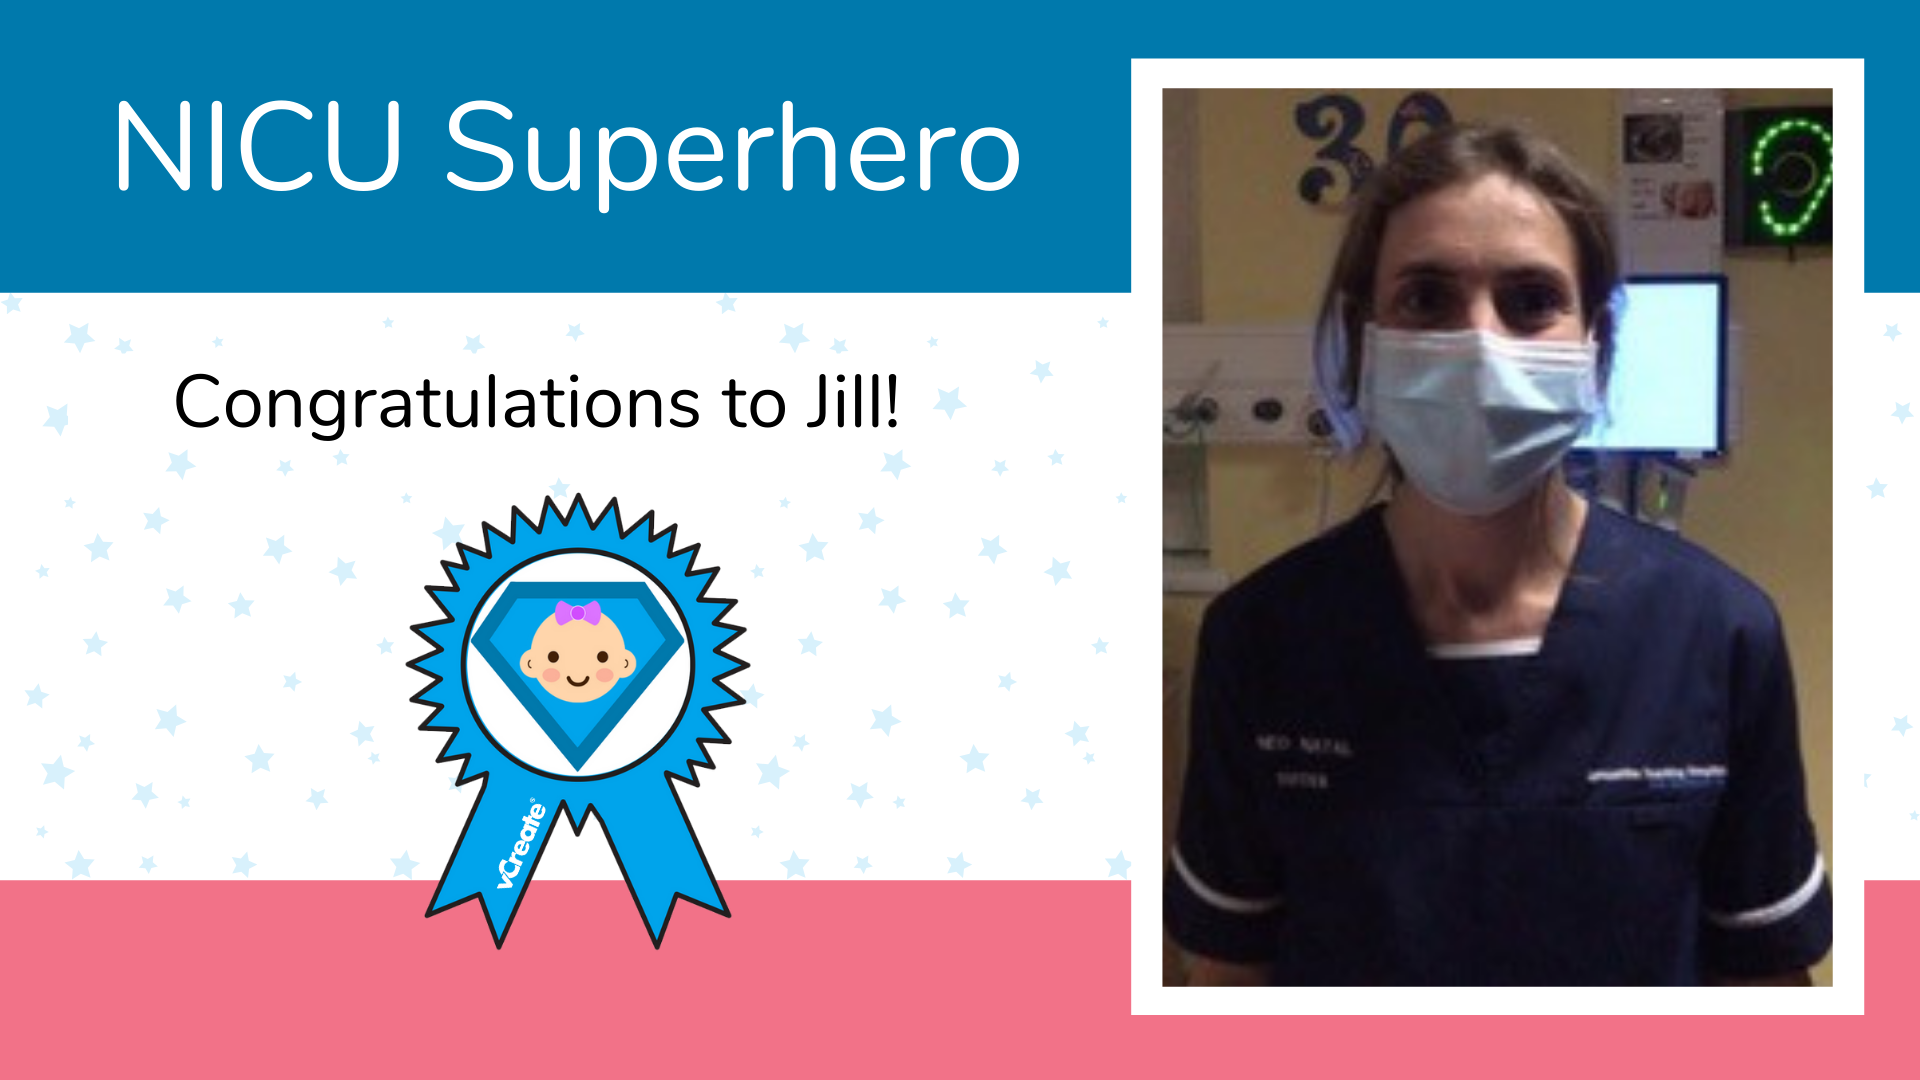 Jill from Royal Preston Hospital is our NICU Superhero this week!